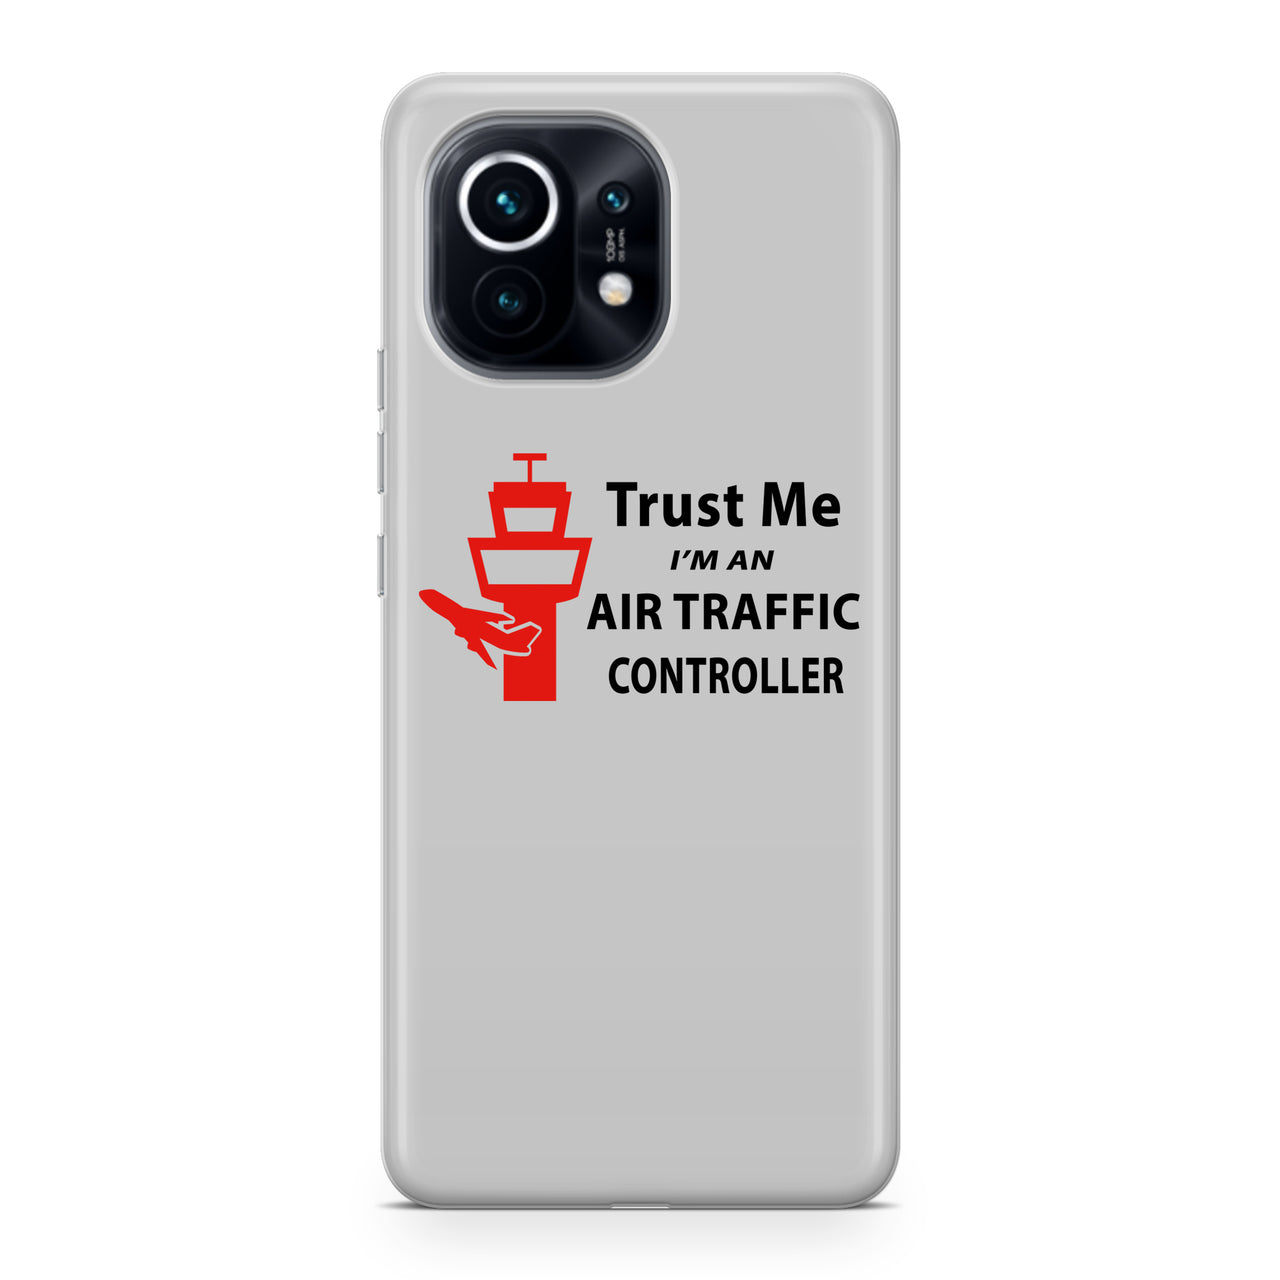 Trust Me I'm an Air Traffic Controller Designed Xiaomi Cases